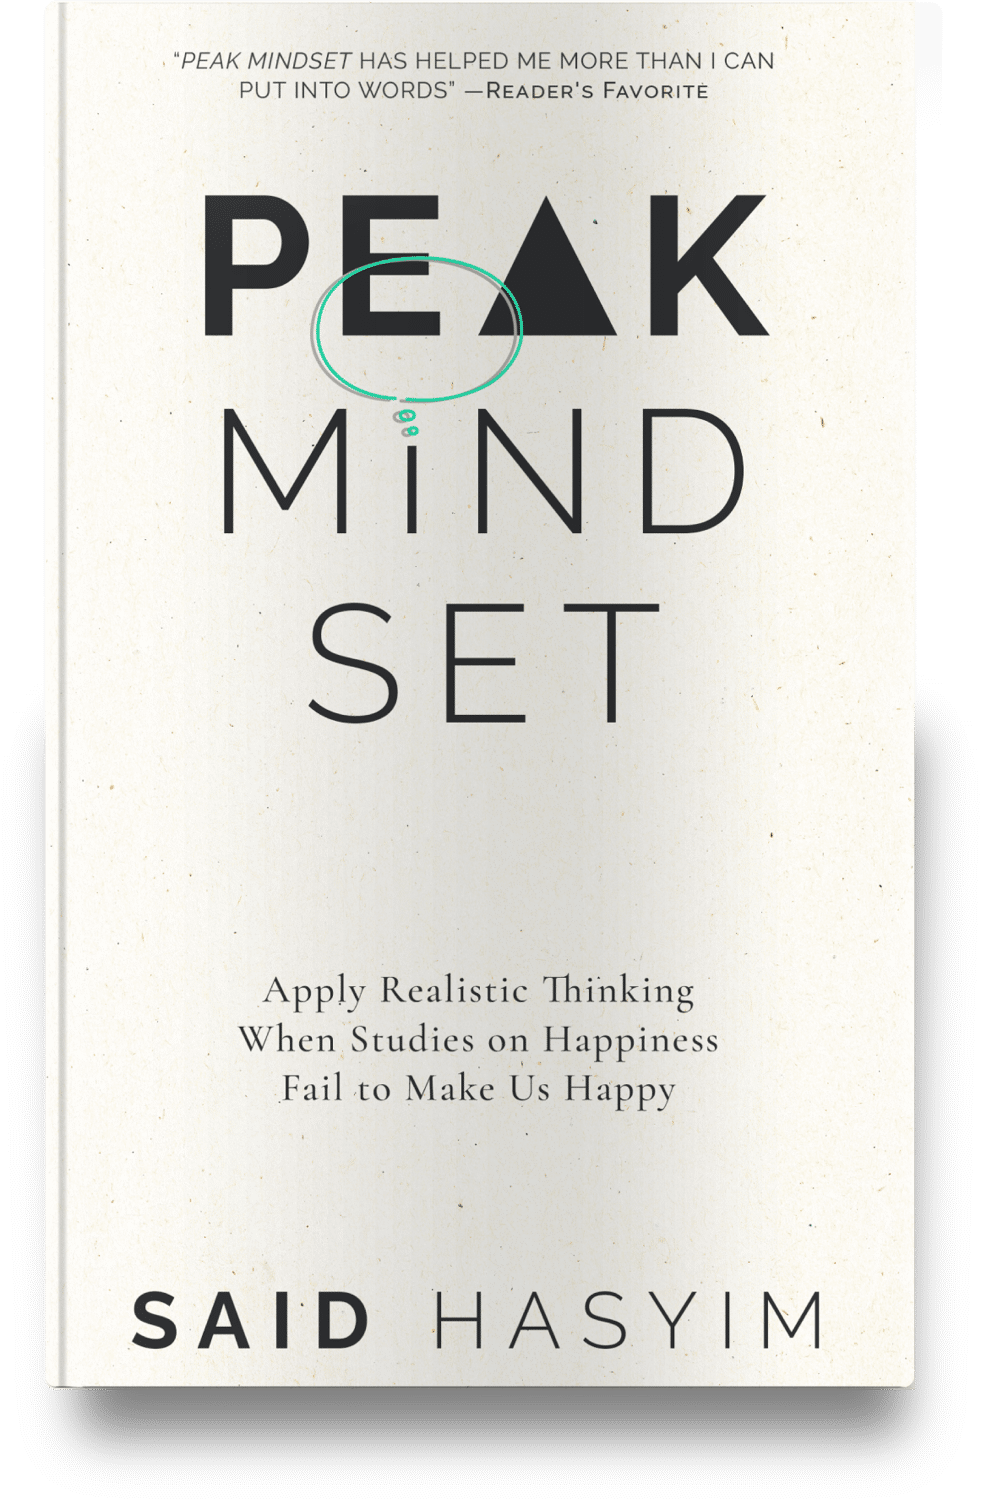 Peak Mindset Book cover